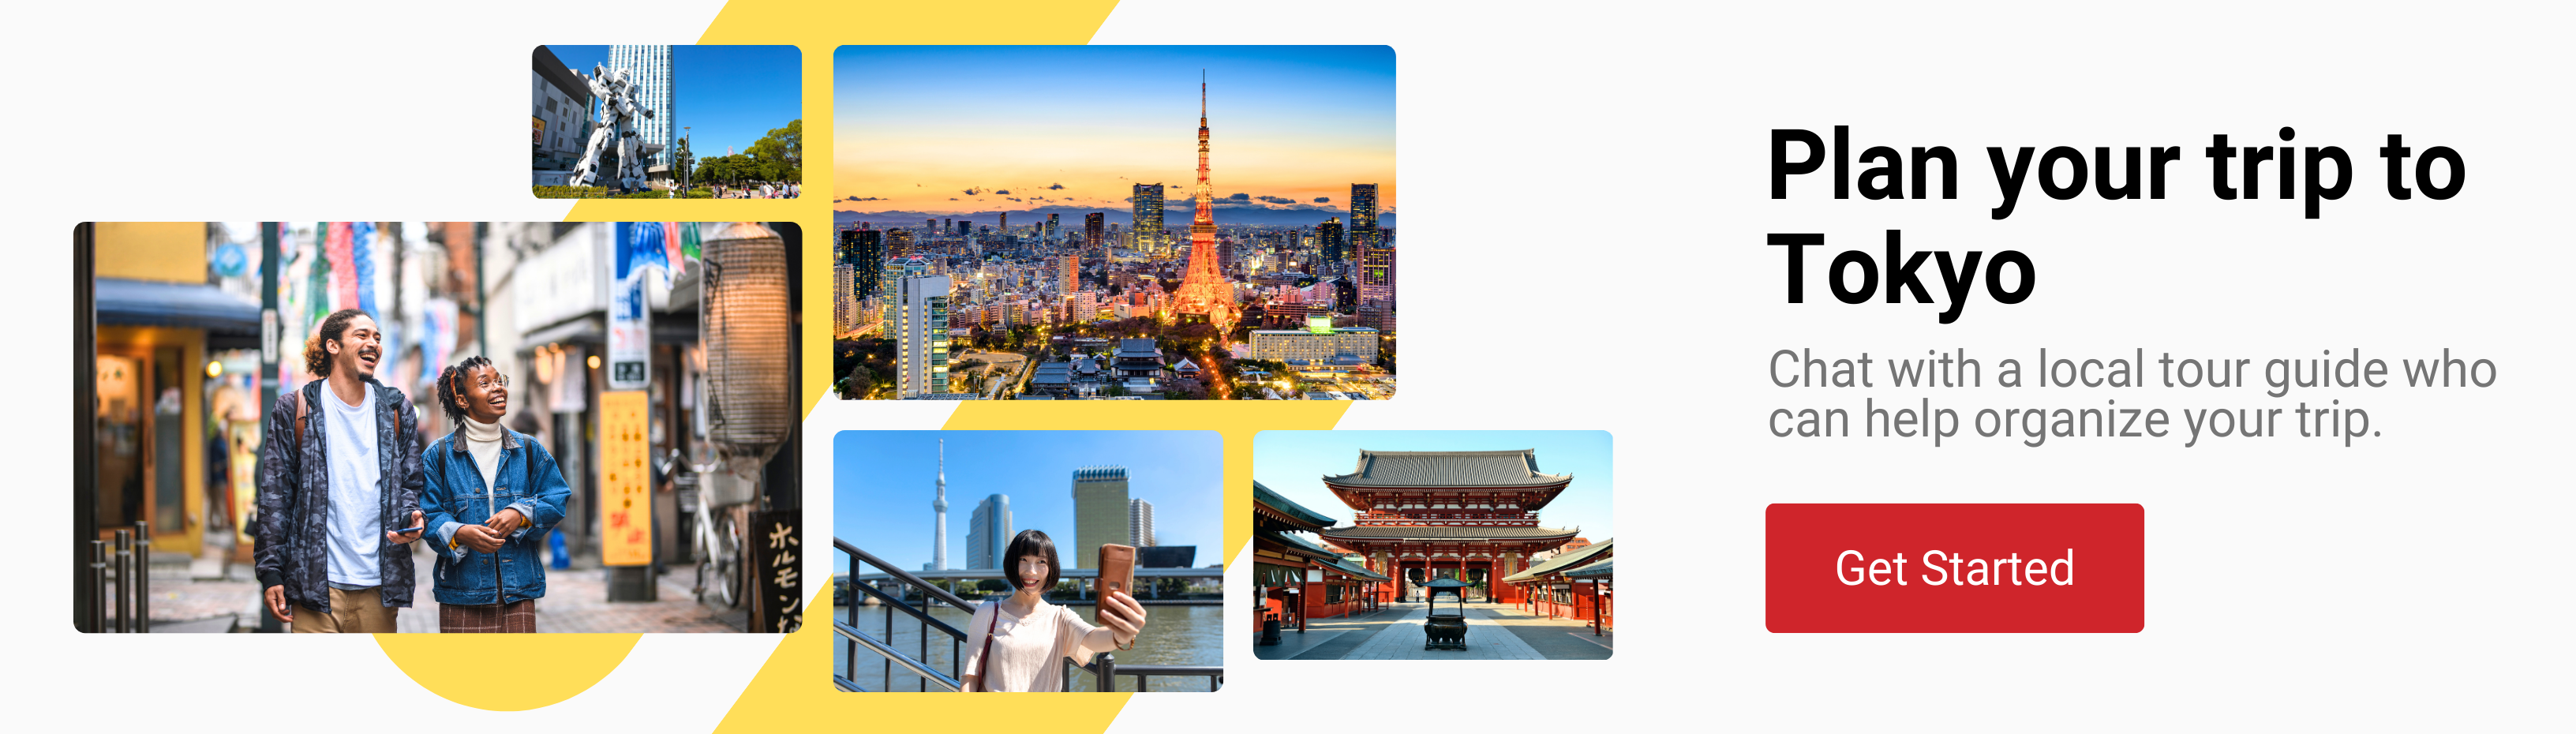 Tokyo Tour Guide 